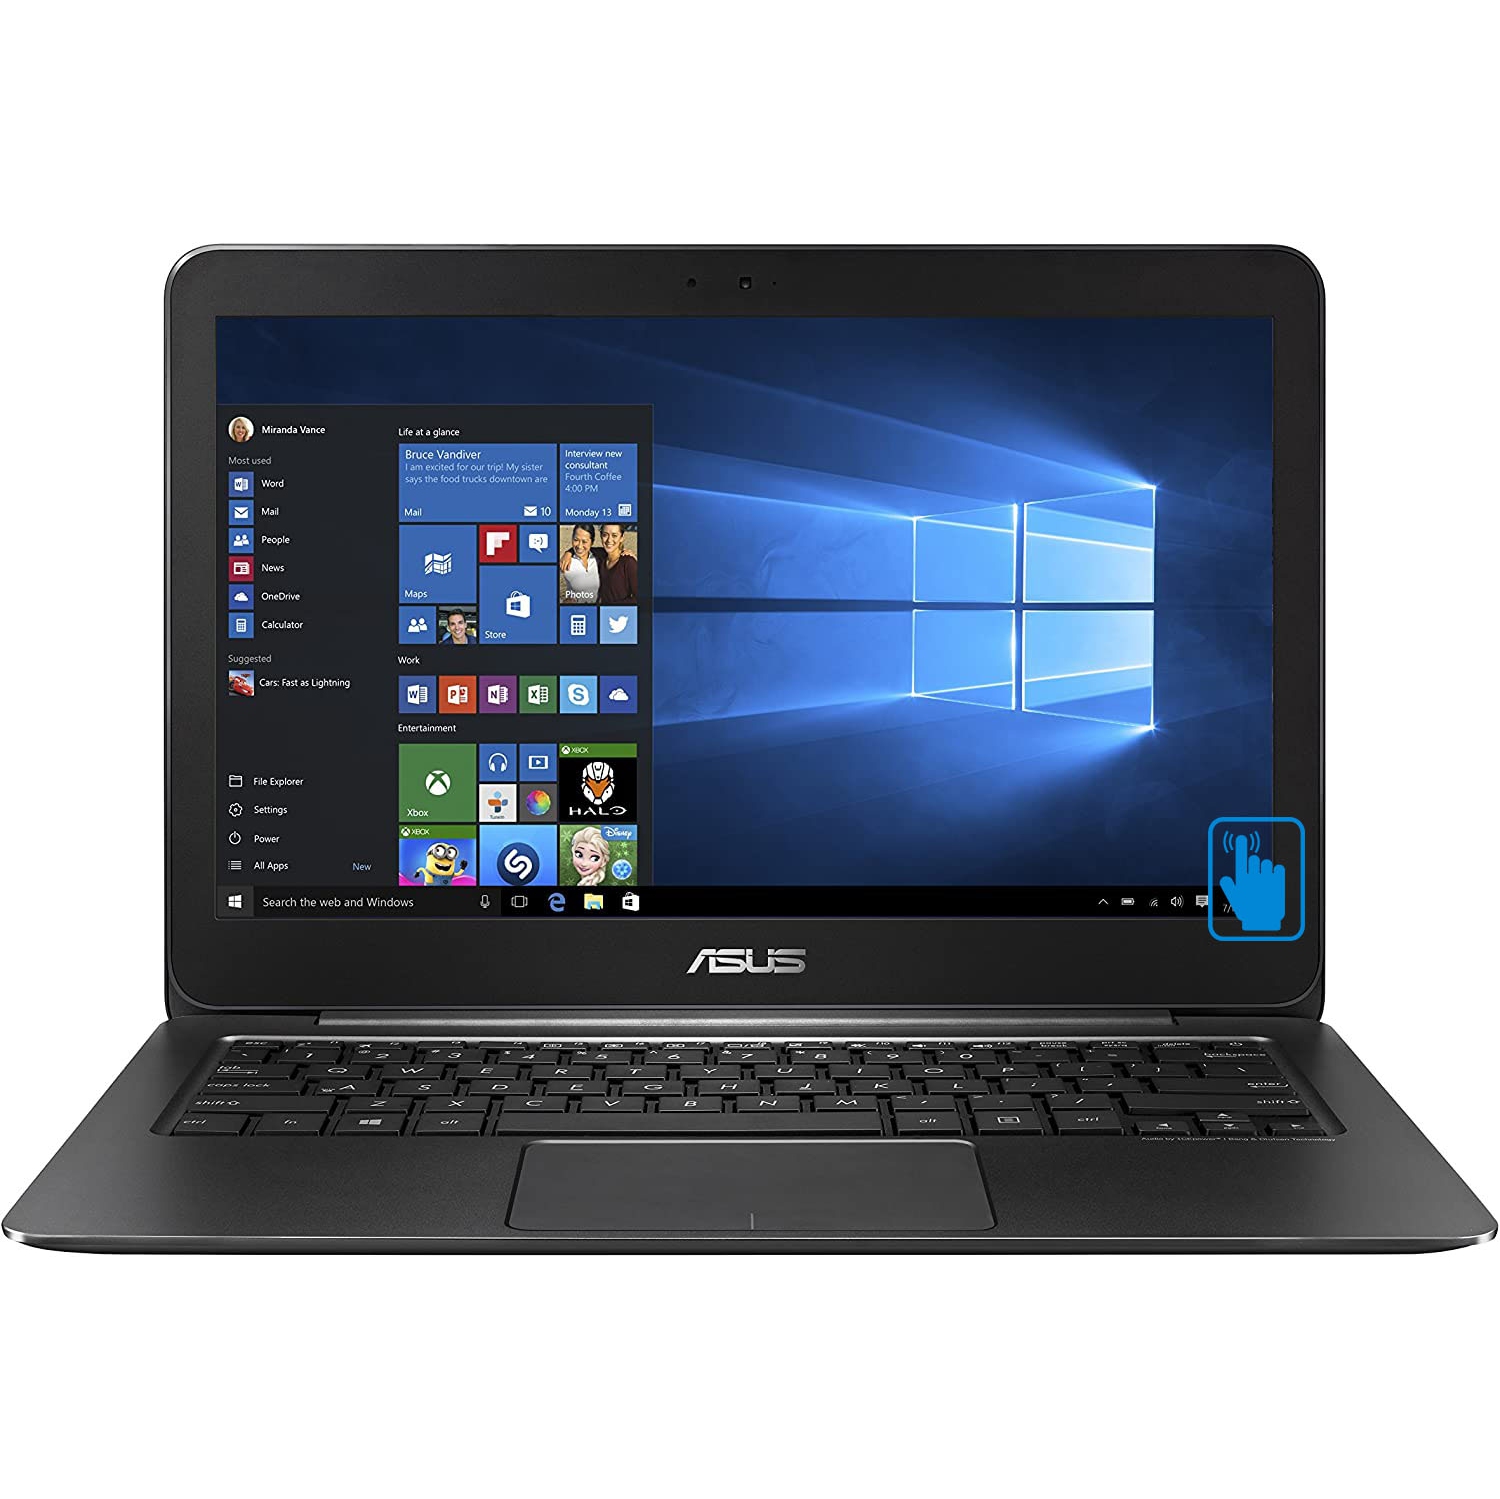 Custom ASUS ZenBook Signature Edition Laptop (Intel M3-6Y30, 8GB RAM, 256GB m.2 SATA SSD, Intel HD 515, 13.3" Win 10 Pro)